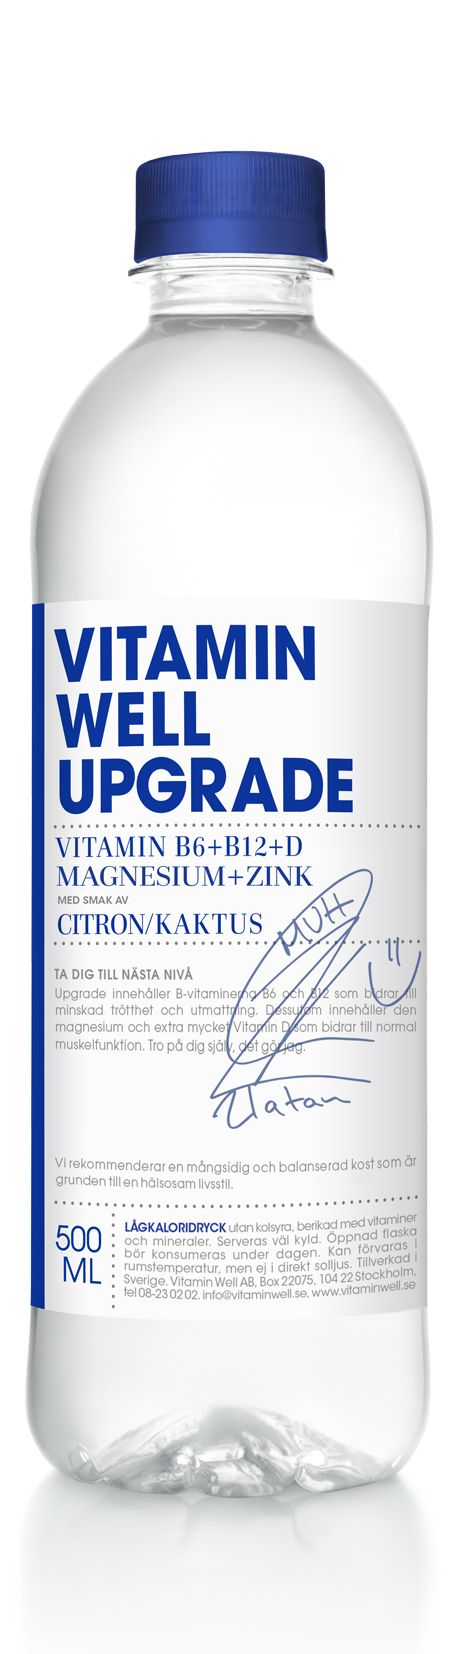 Vitamin Well Upgrade Zlatan